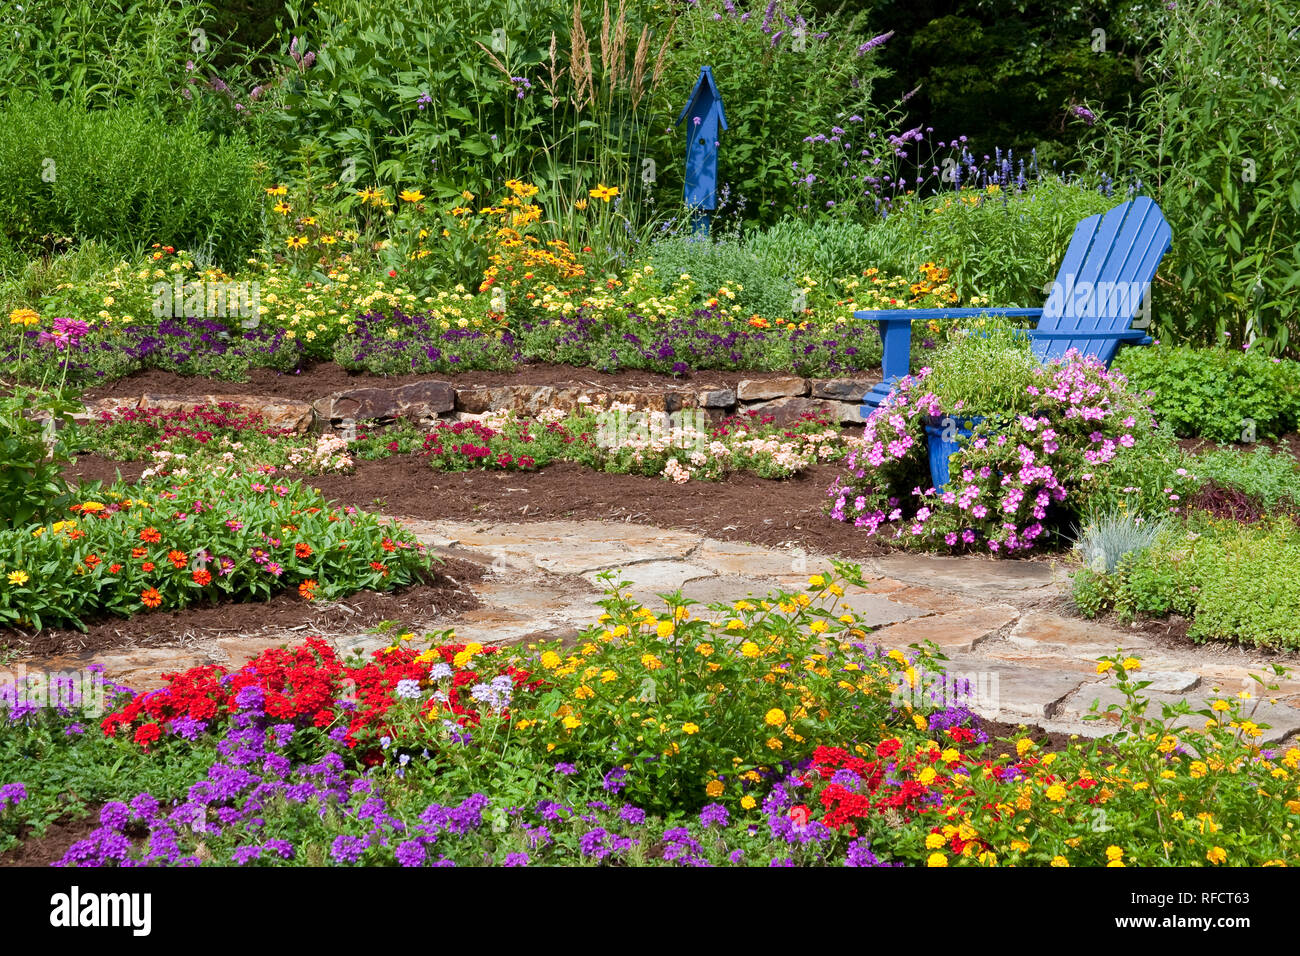 63821-21818 Flower garden with blue Adirondack chair and blue bird house. Butterfly Bushes, Peach & Purple Verbenas, Yellow Lantana (Lantana camara),  Stock Photo